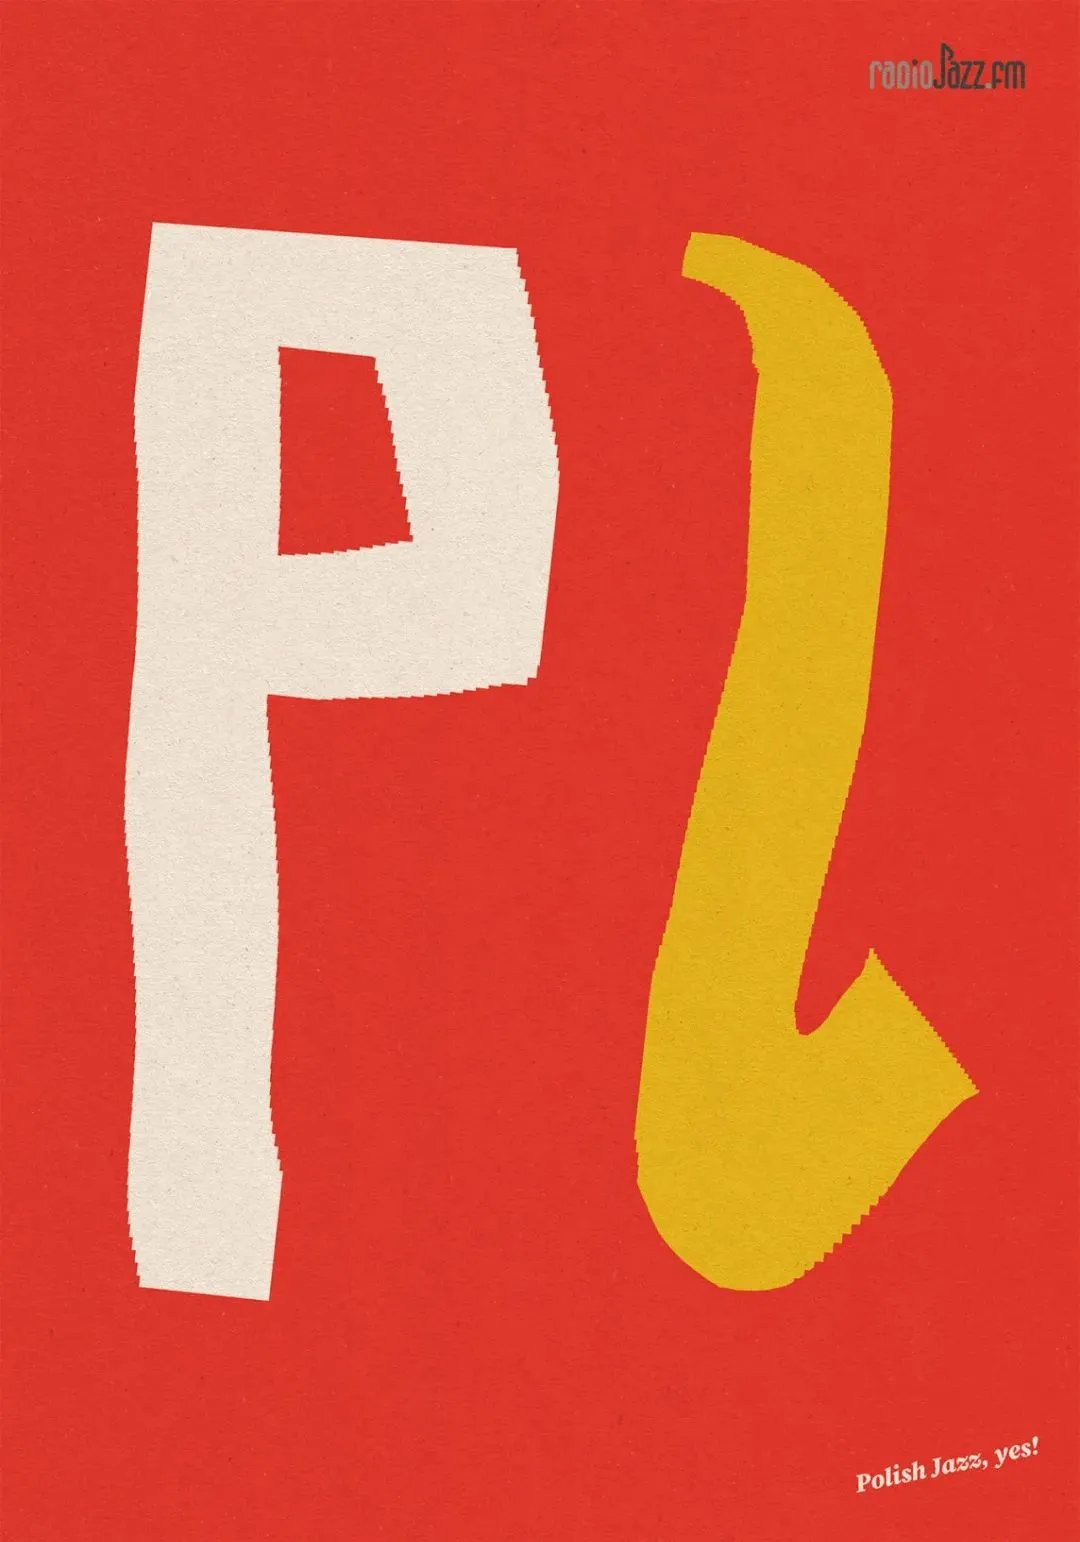 poland|2021波兰第三届We Want Jazz国际海报竞赛获奖作品